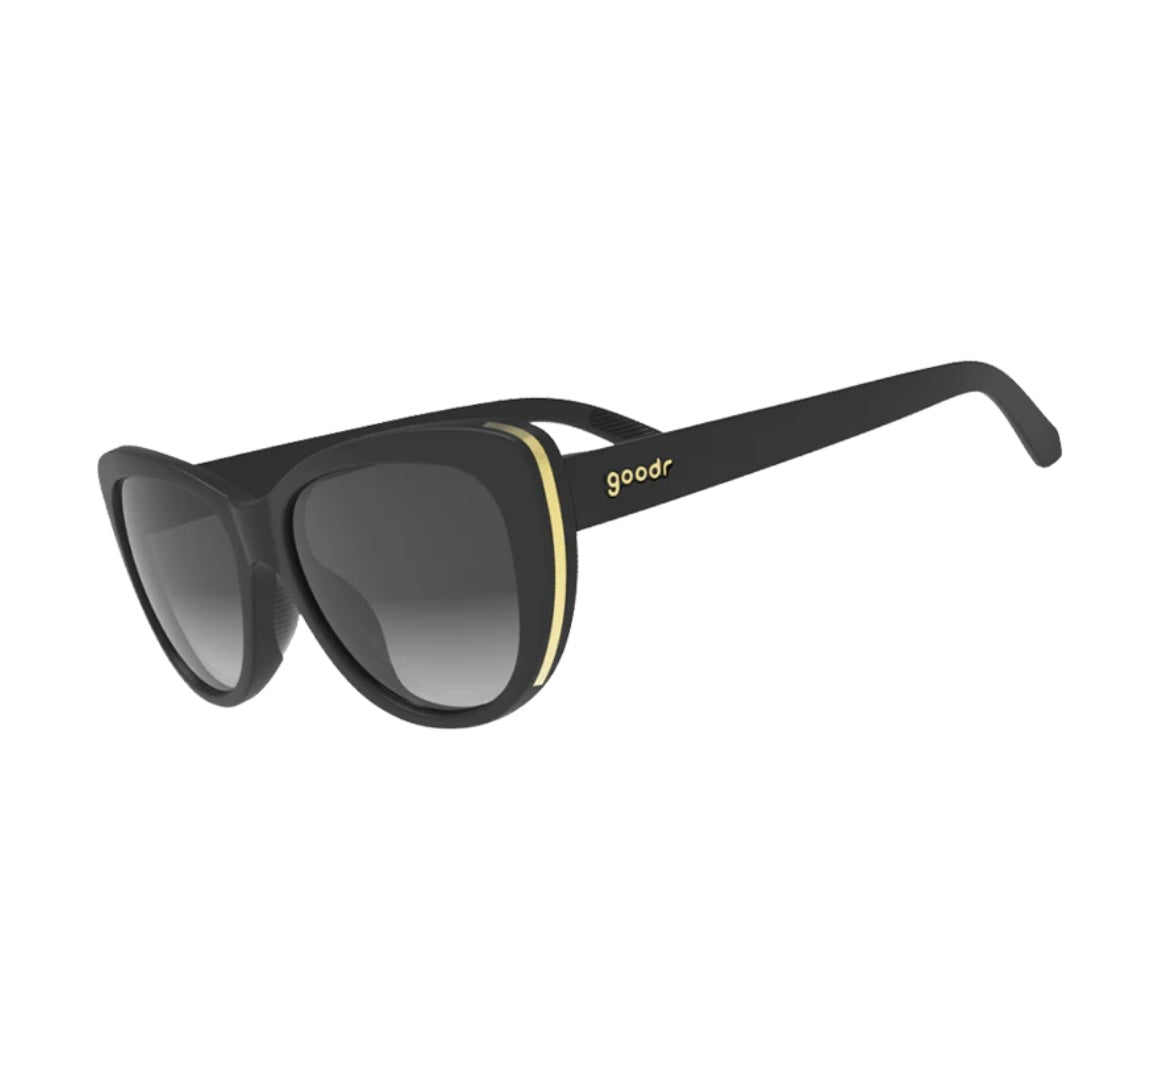 Good R Sunglasses - Runway - BHI